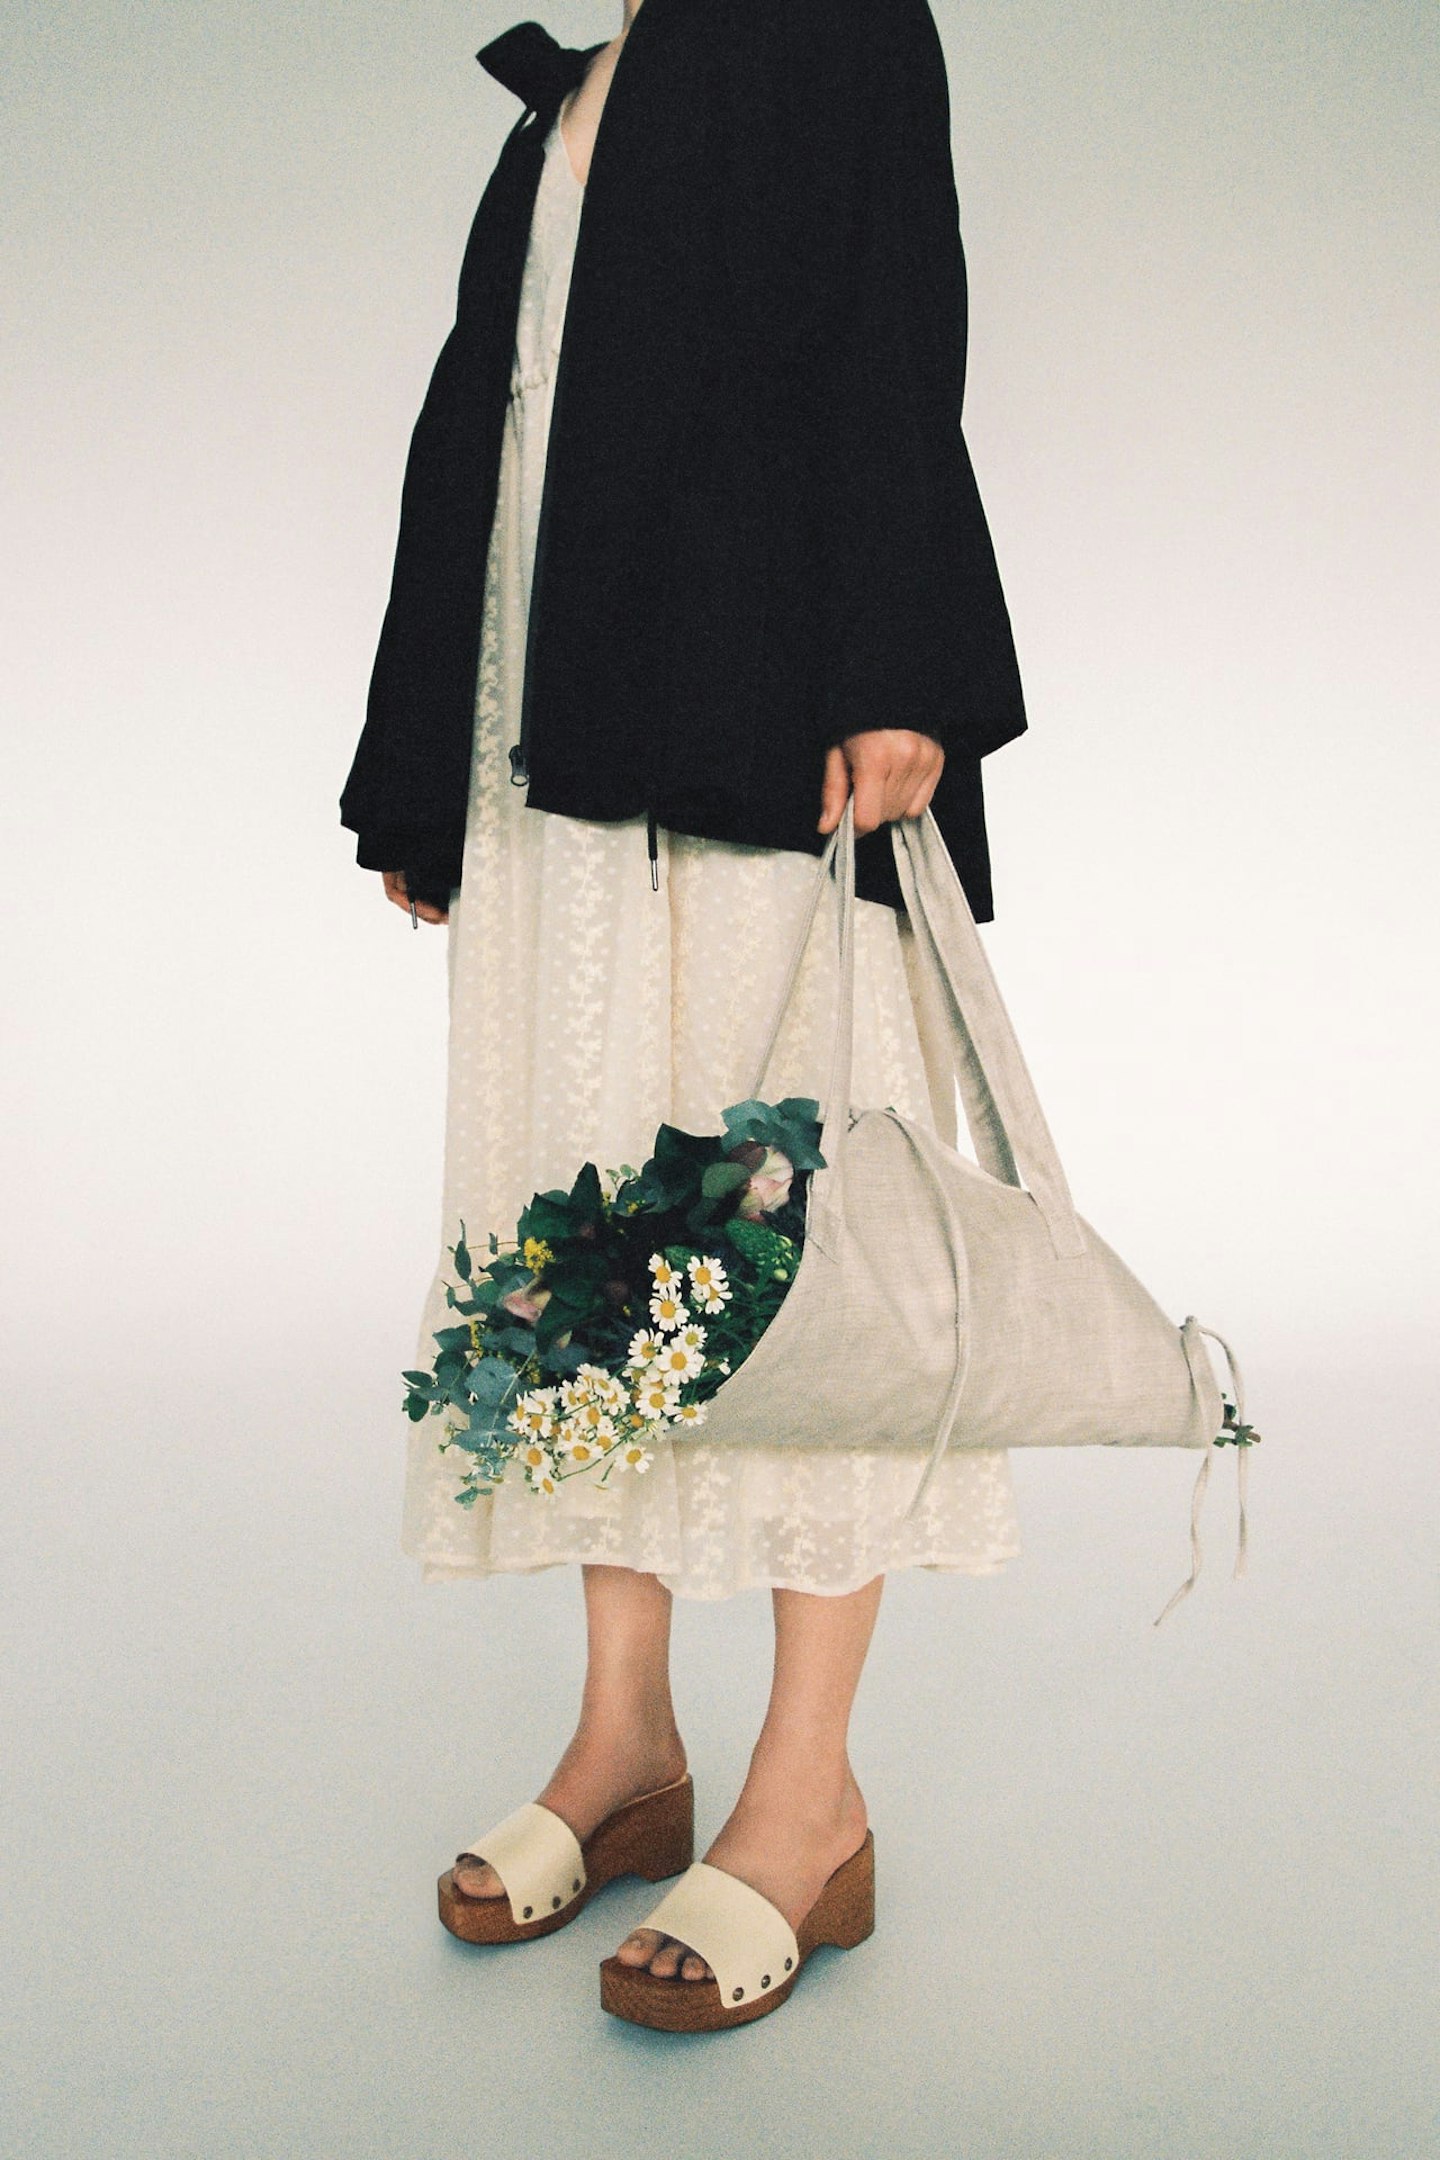 Zara, Flower-Carrying Bag, £19.99